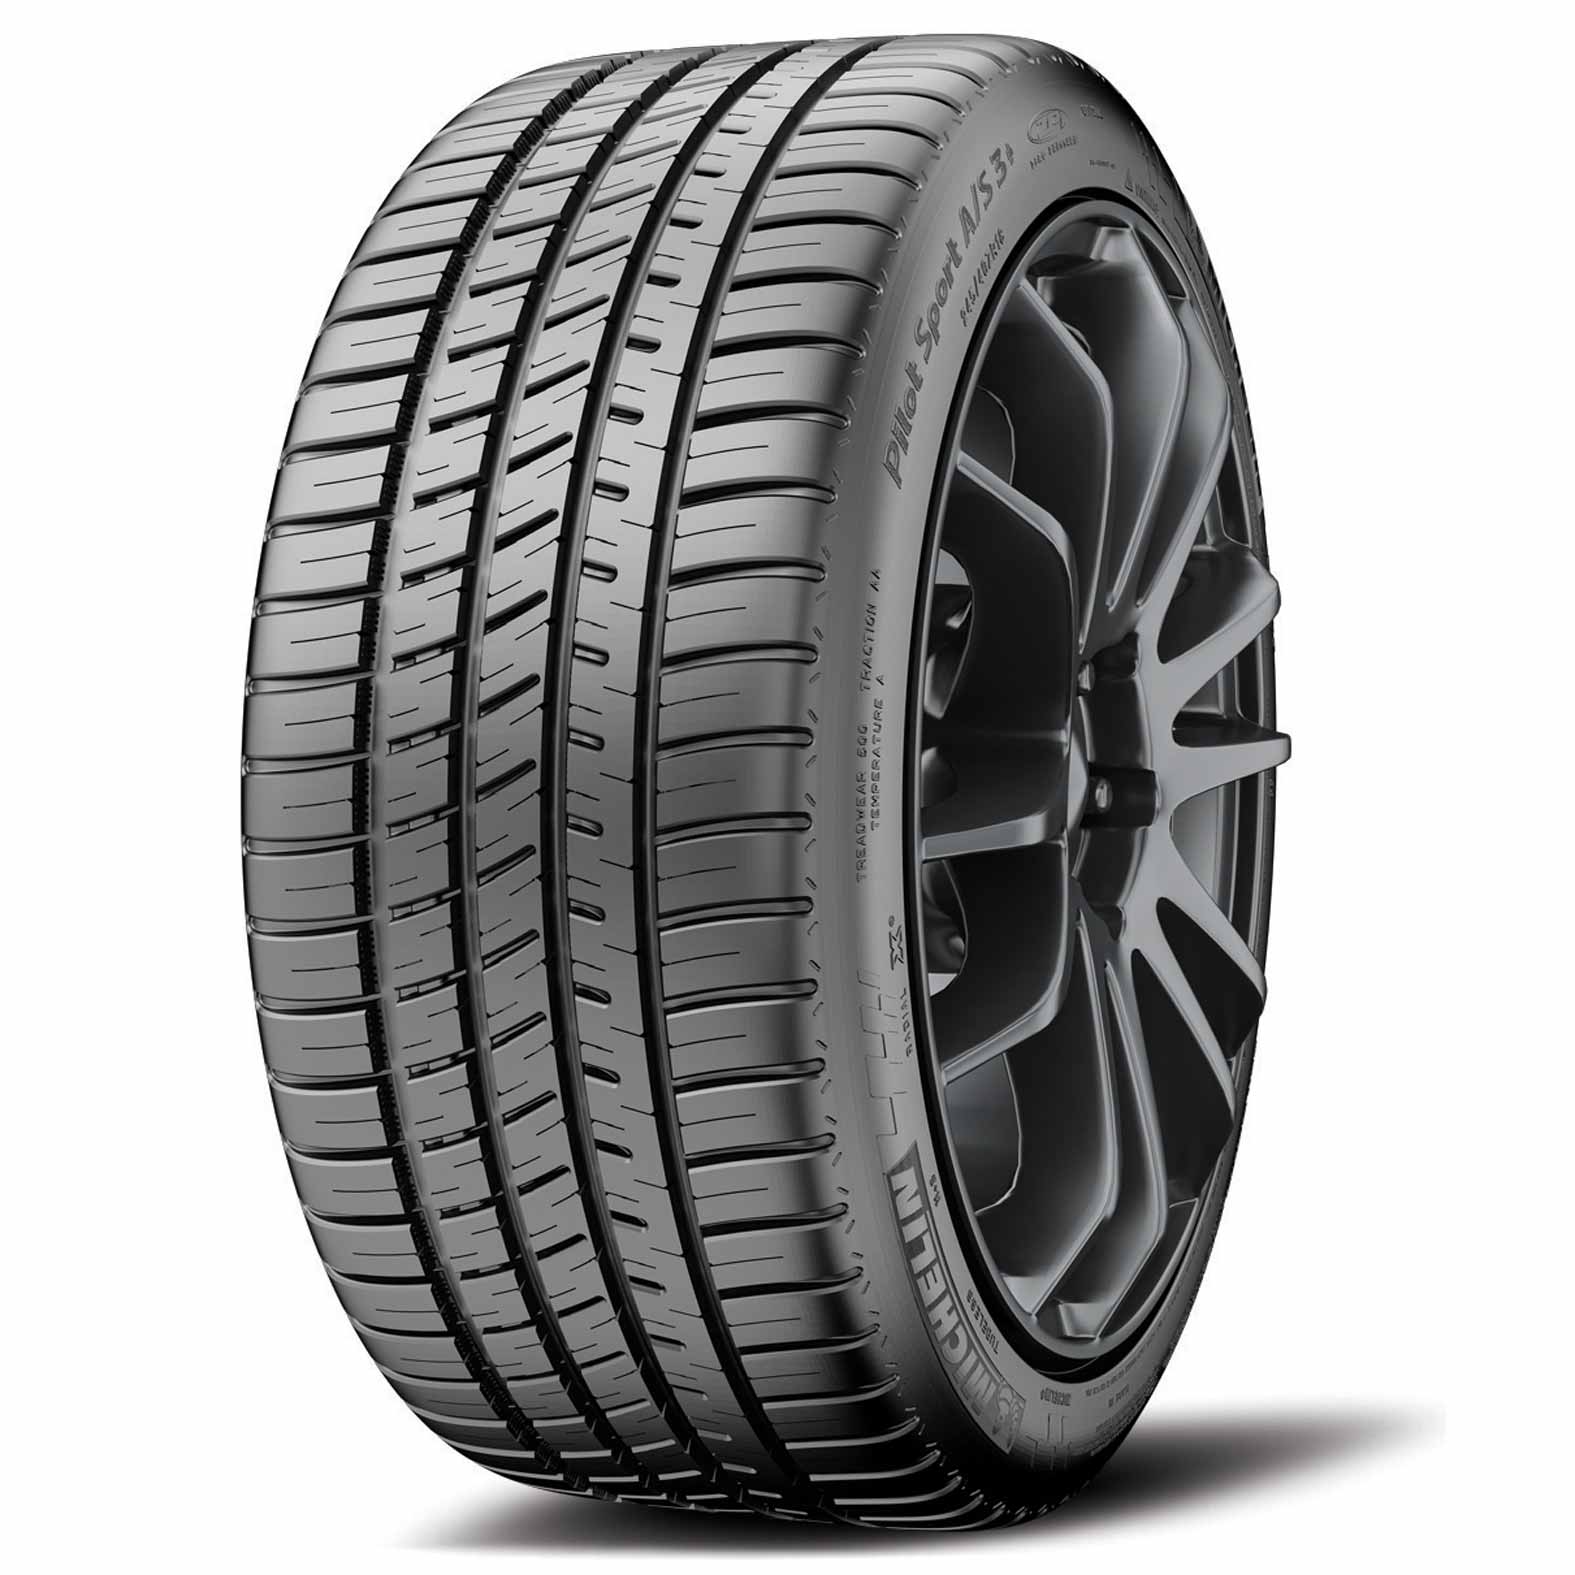 Michelin PILOT SPORT A/S 3+ tires